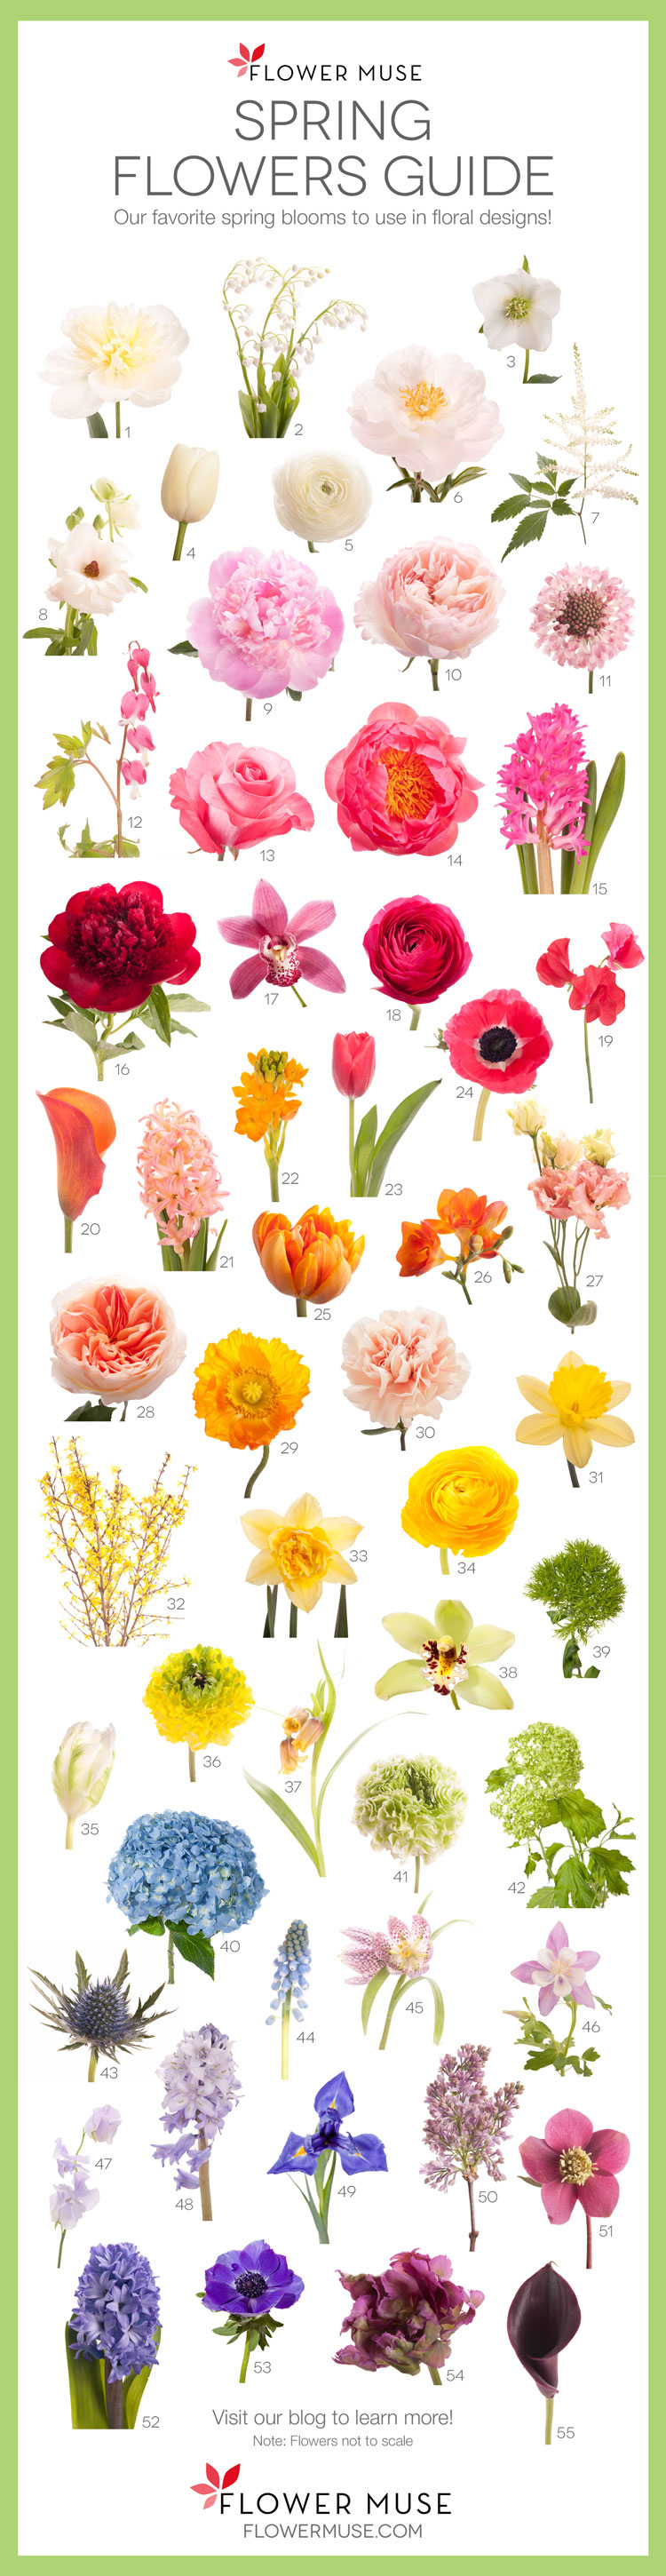 Spring Flowers Guide | Flower Muse Blog